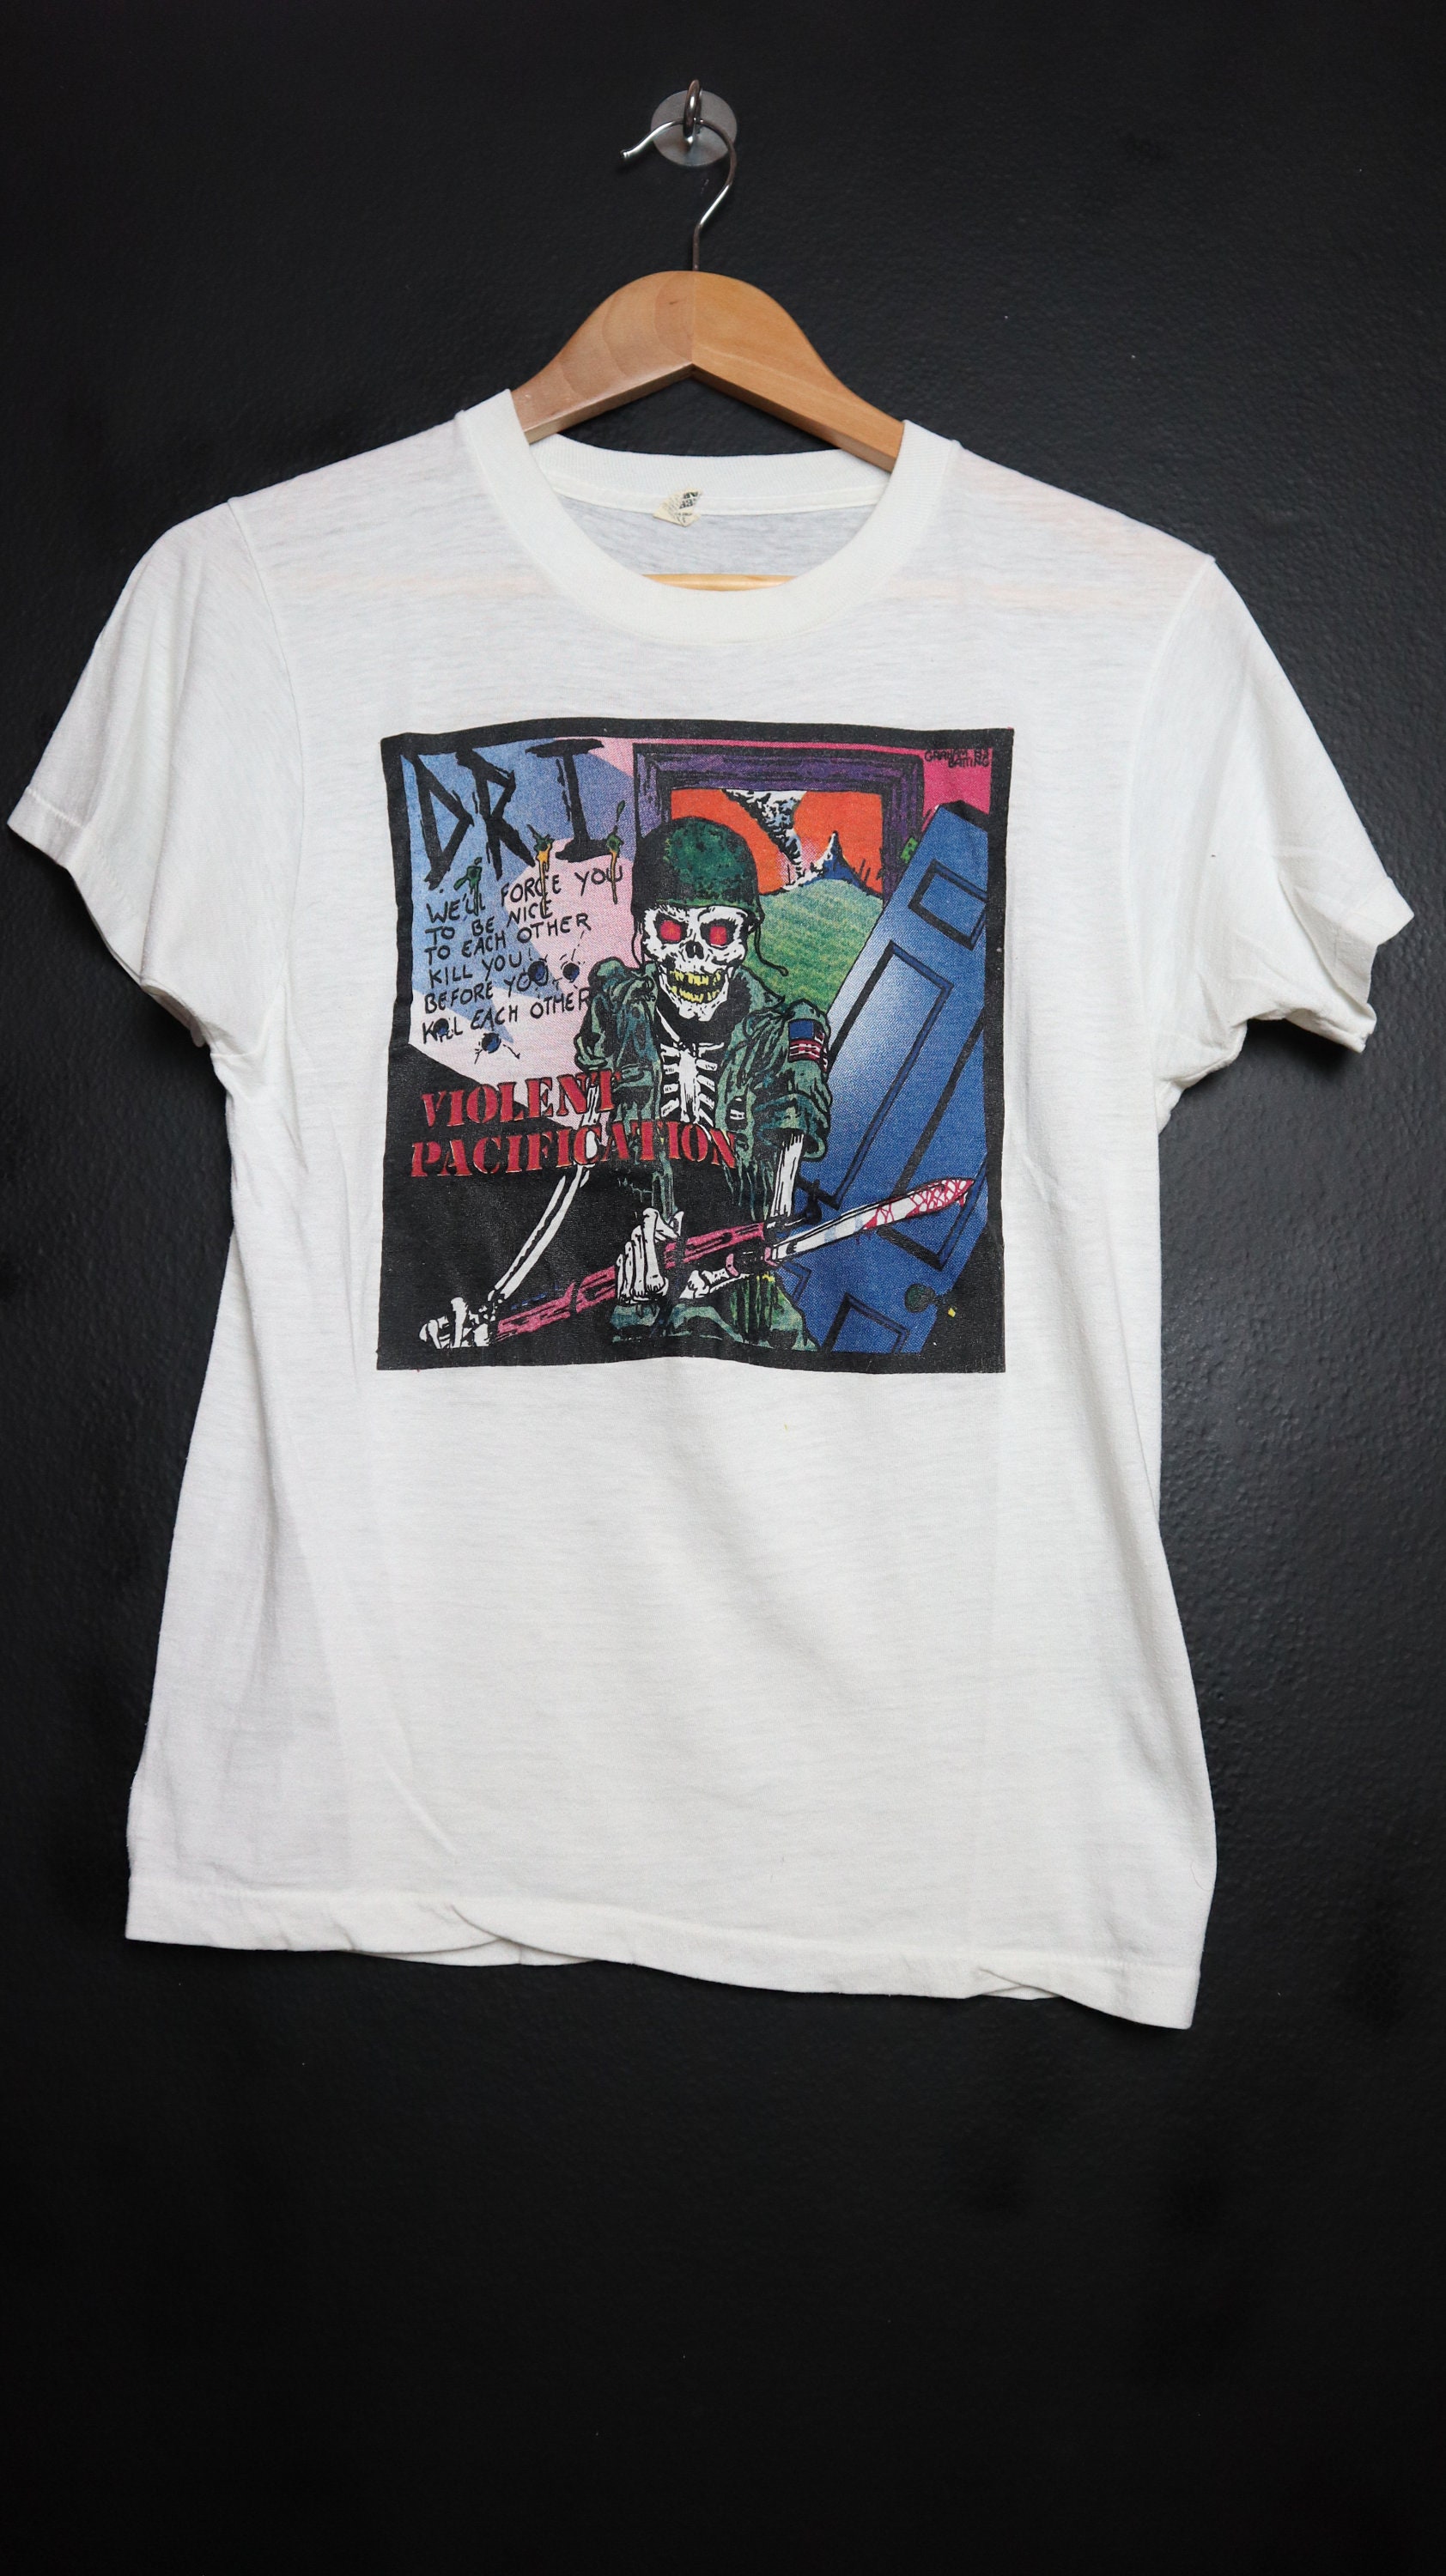 D.R.I Dirty Rotten Imbeciles Violent Pacification 1983 Vintage Shirt